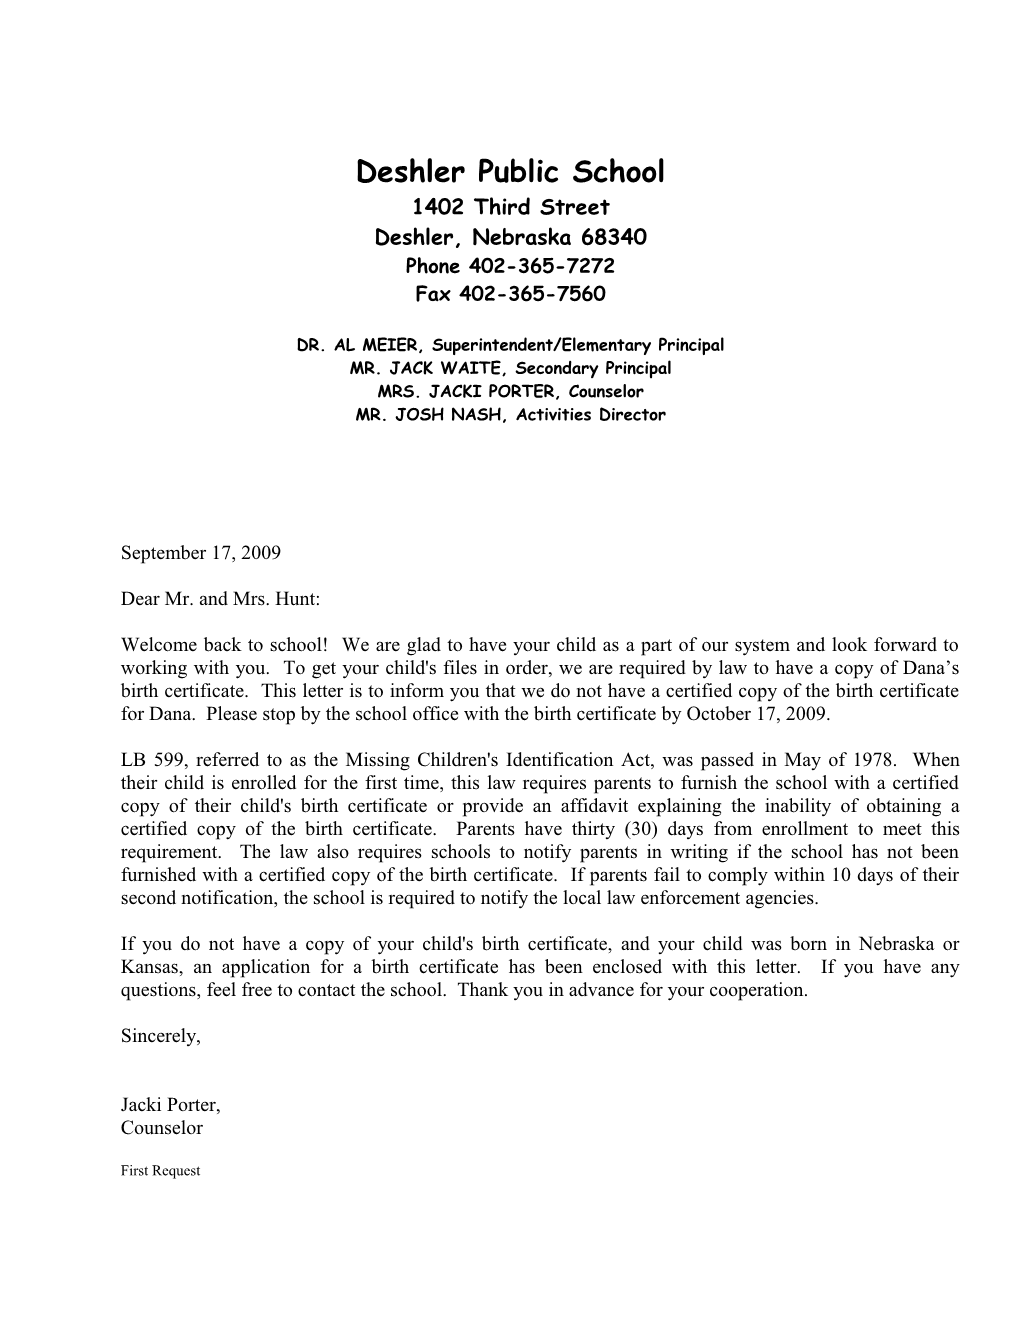 Deshler Public Schools